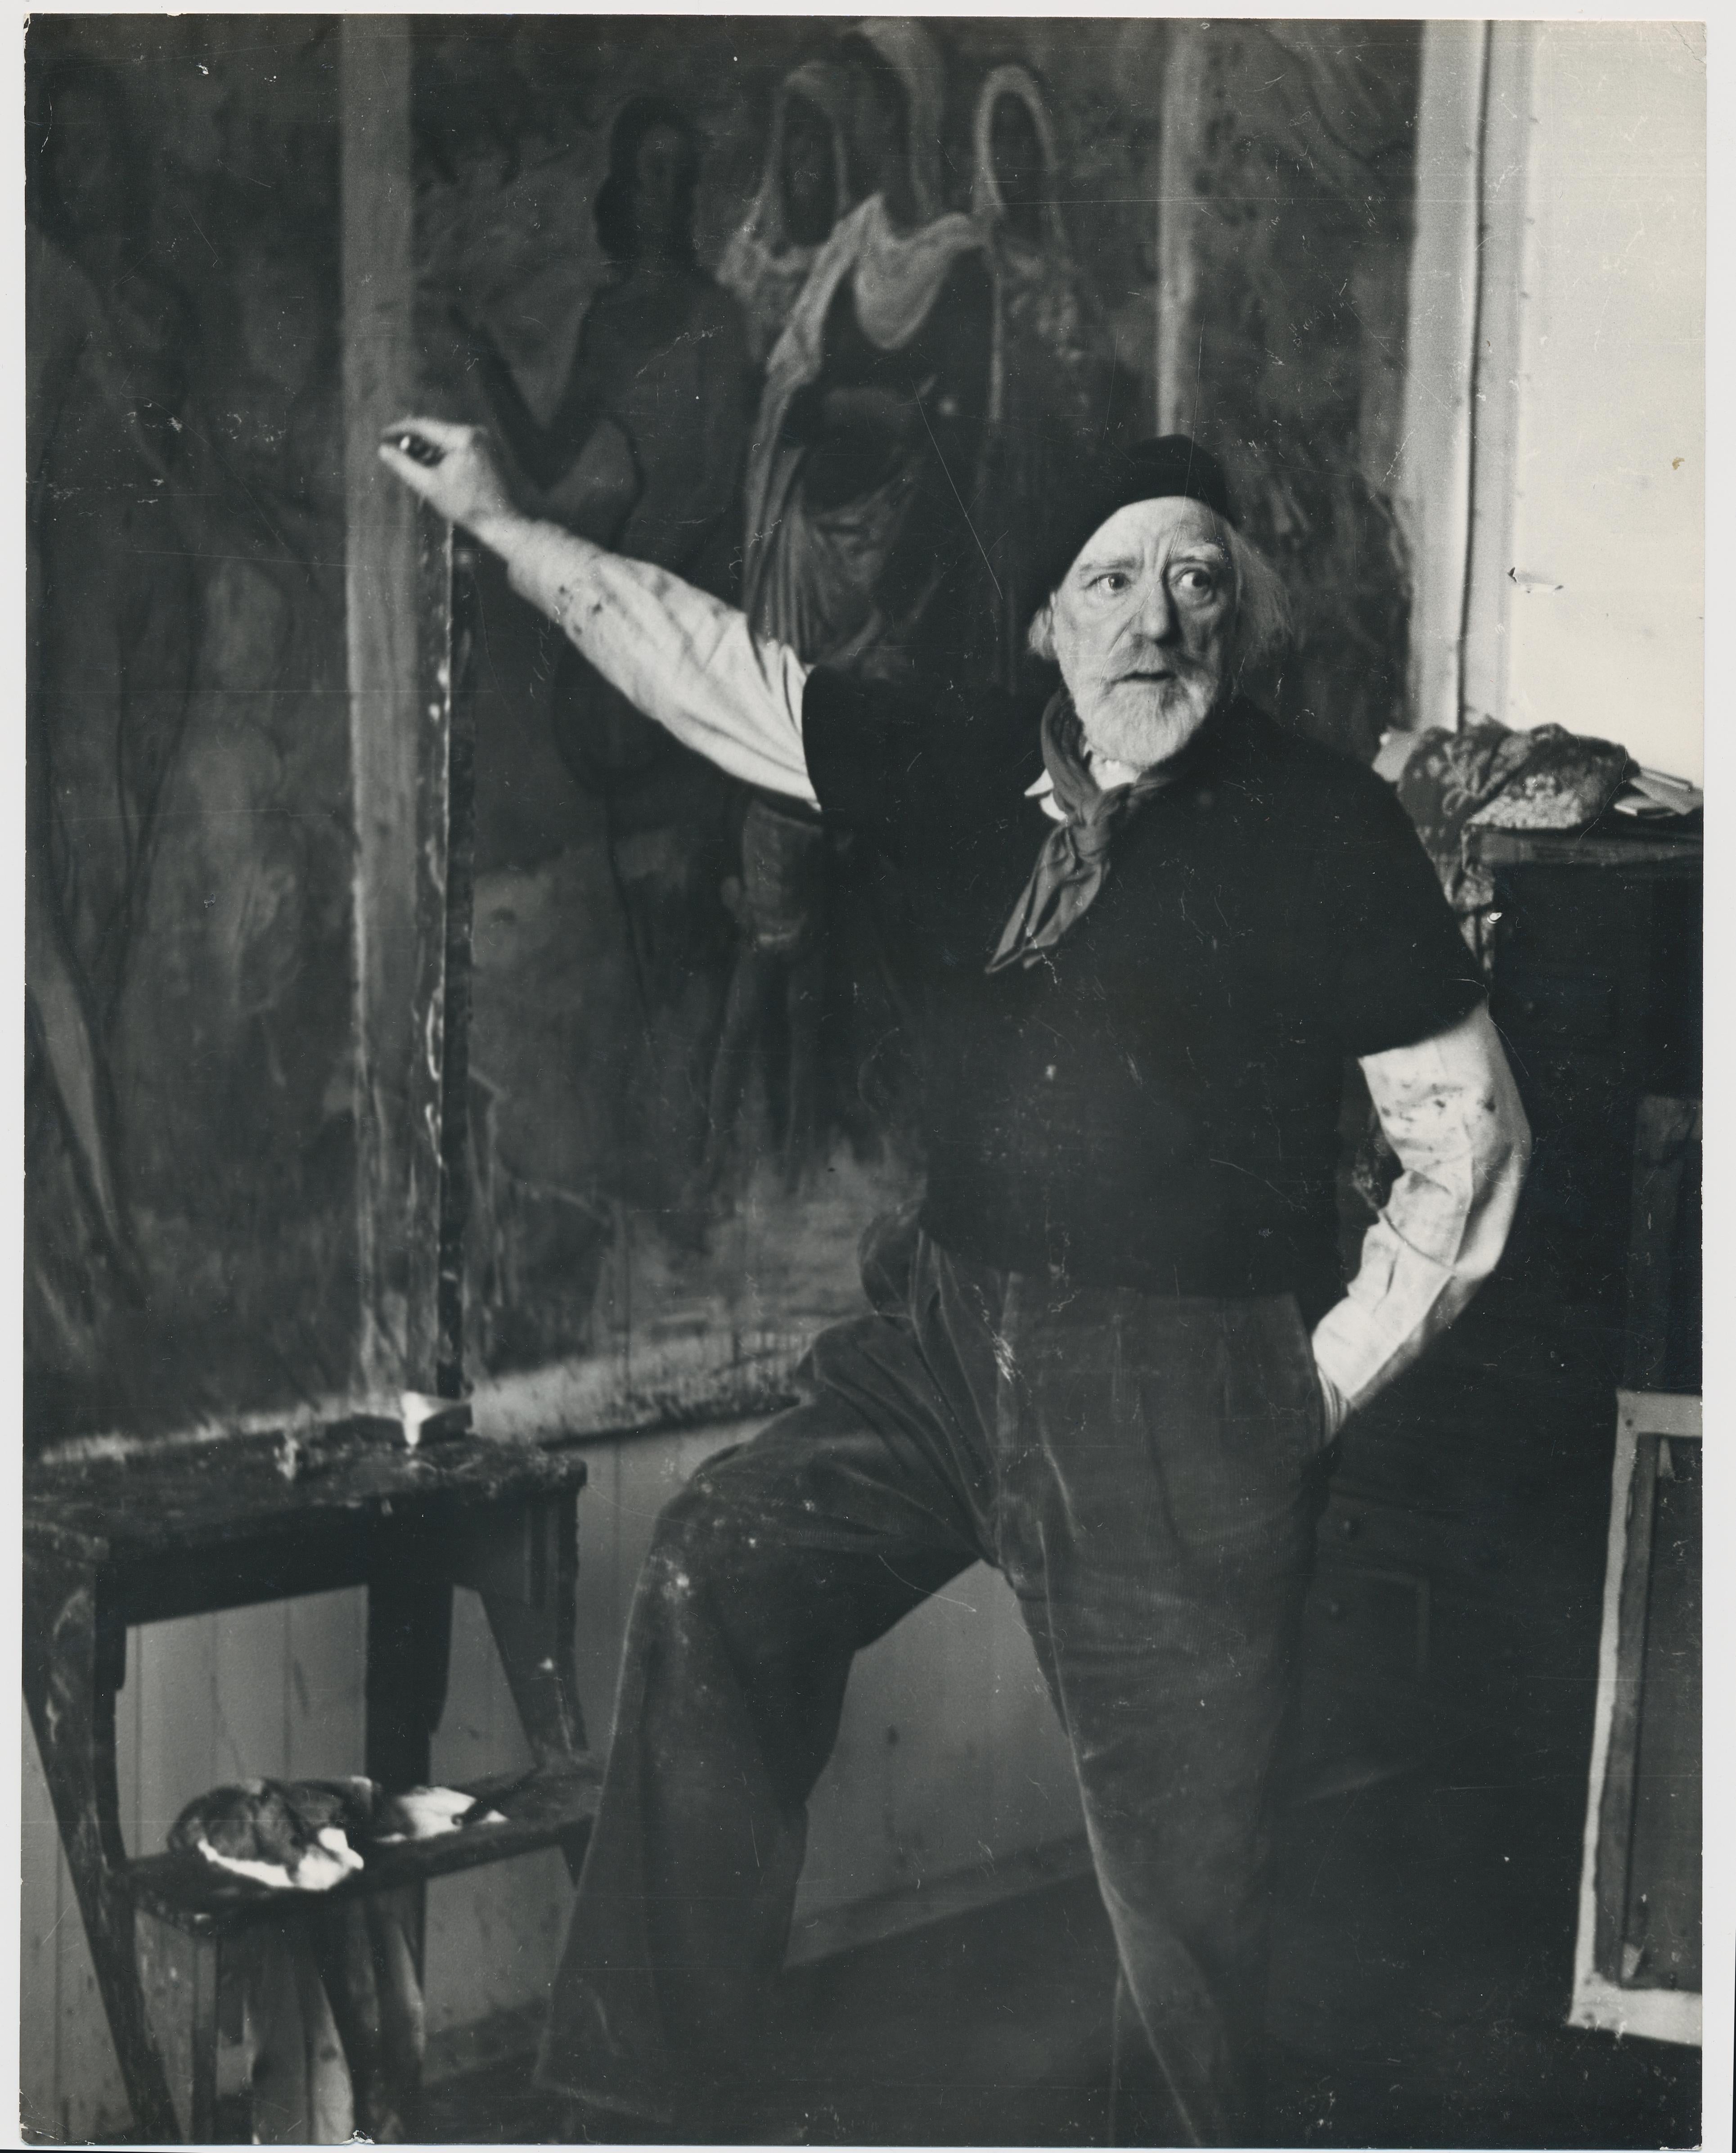 Allan Gordon Chappelow Black and White Photograph – Portr�ät des Malers Augustus John, von Allan Chappelow, England 1953.